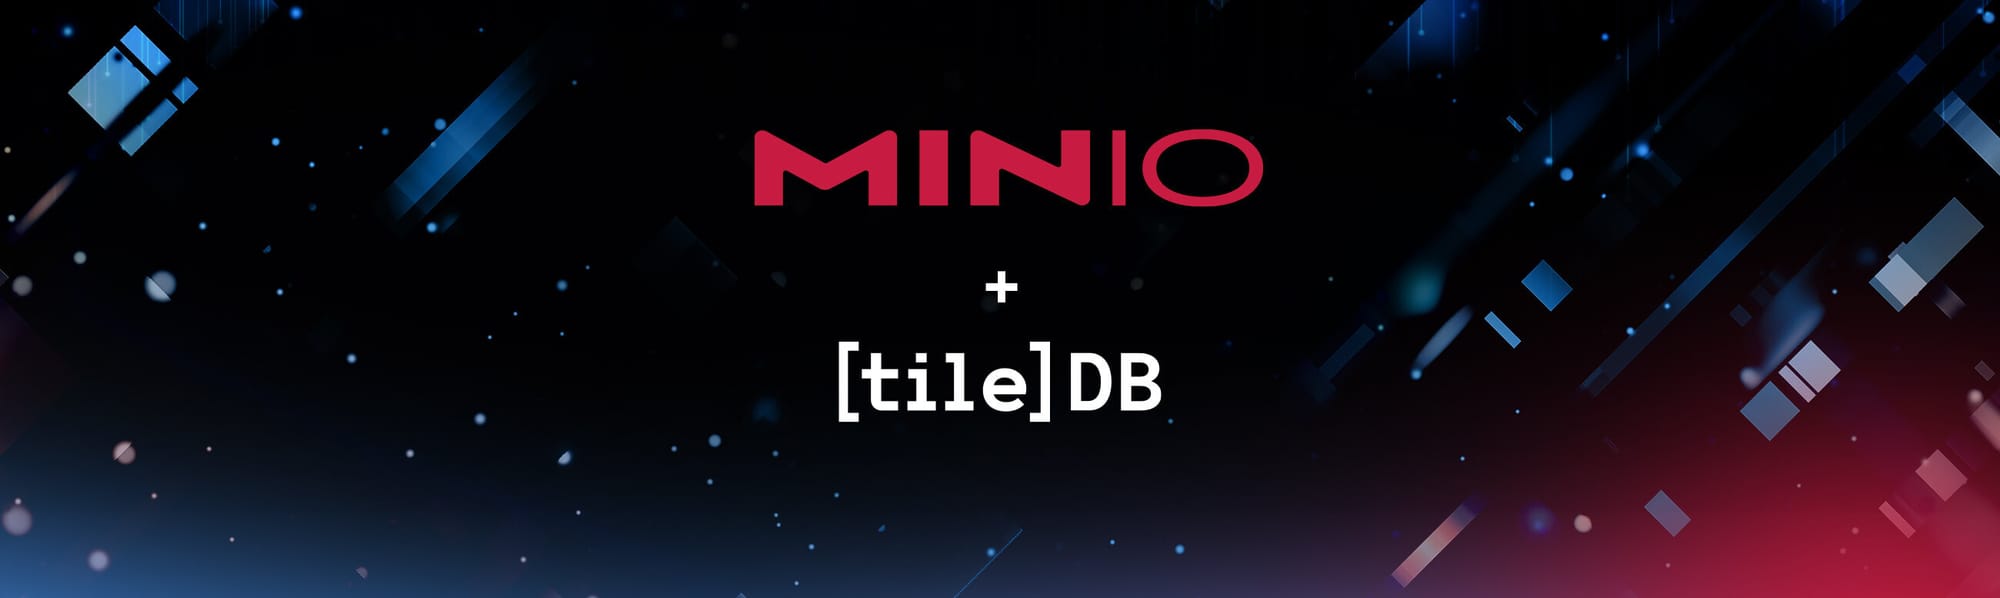 Supercharge TileDB Engine with MinIO